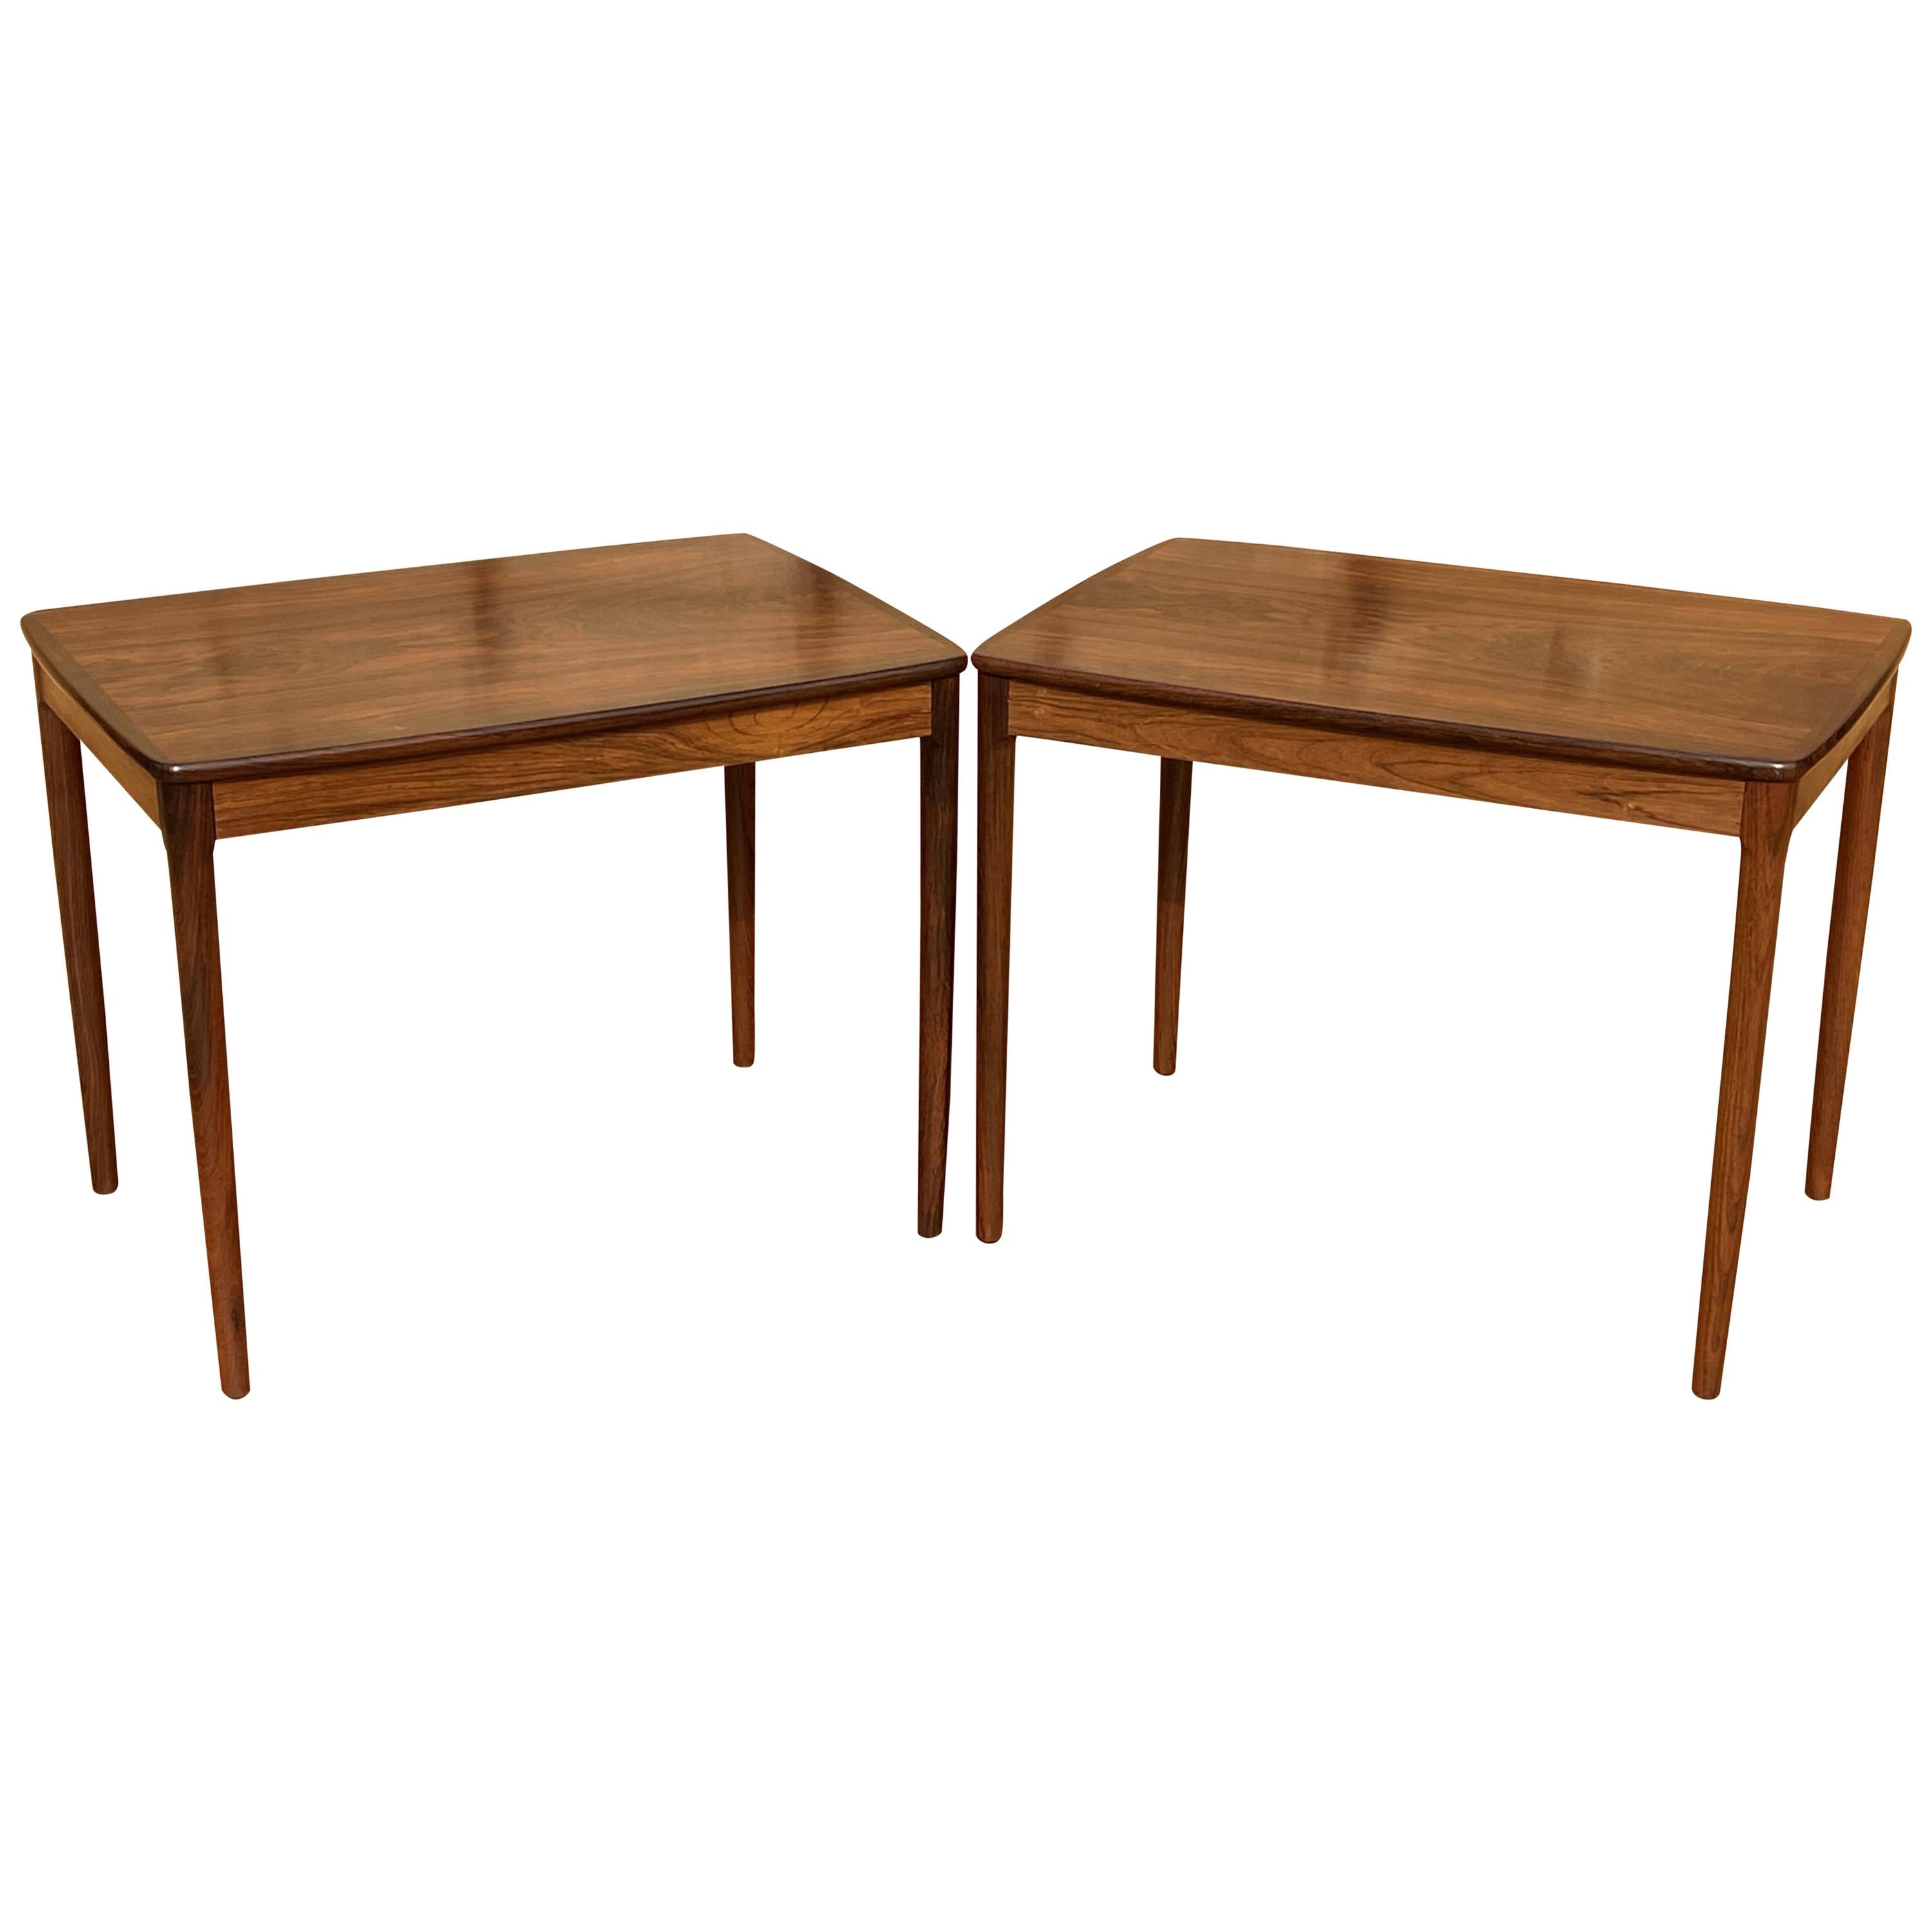 Pair of Santos Rosewood Tables by Yngve Sandstrom for Seffle Mobelfabrik